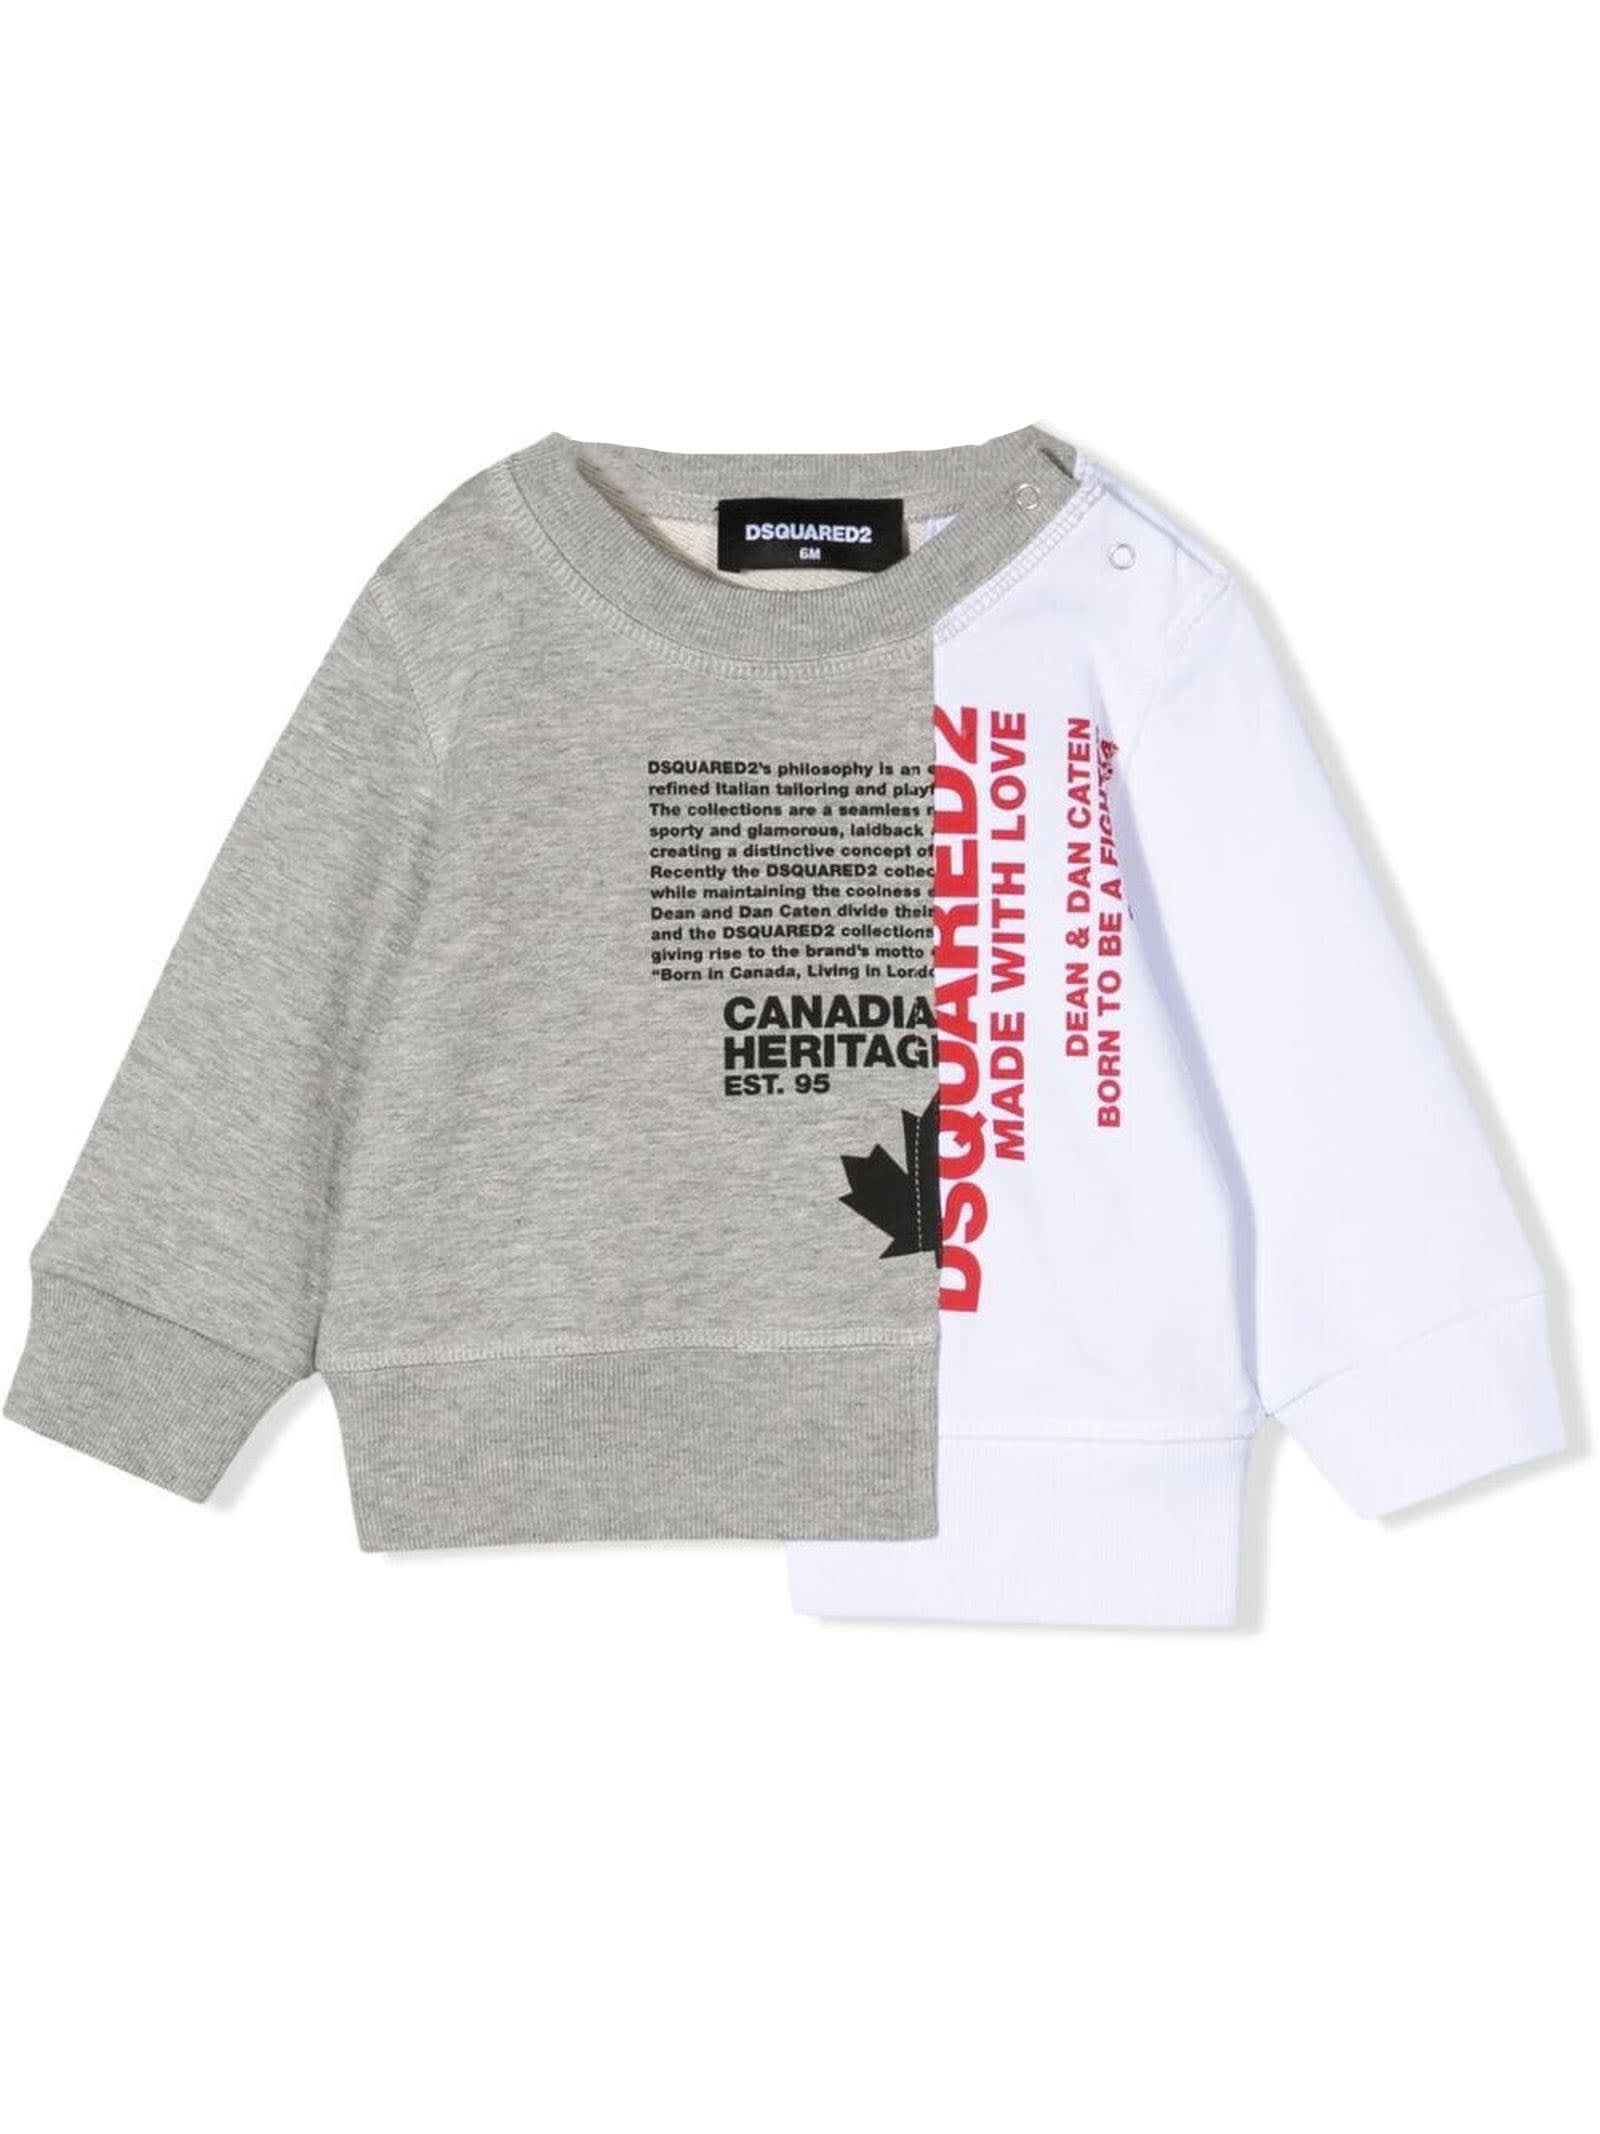 Dsquared2 Grey And White Cotton Sweatshirt